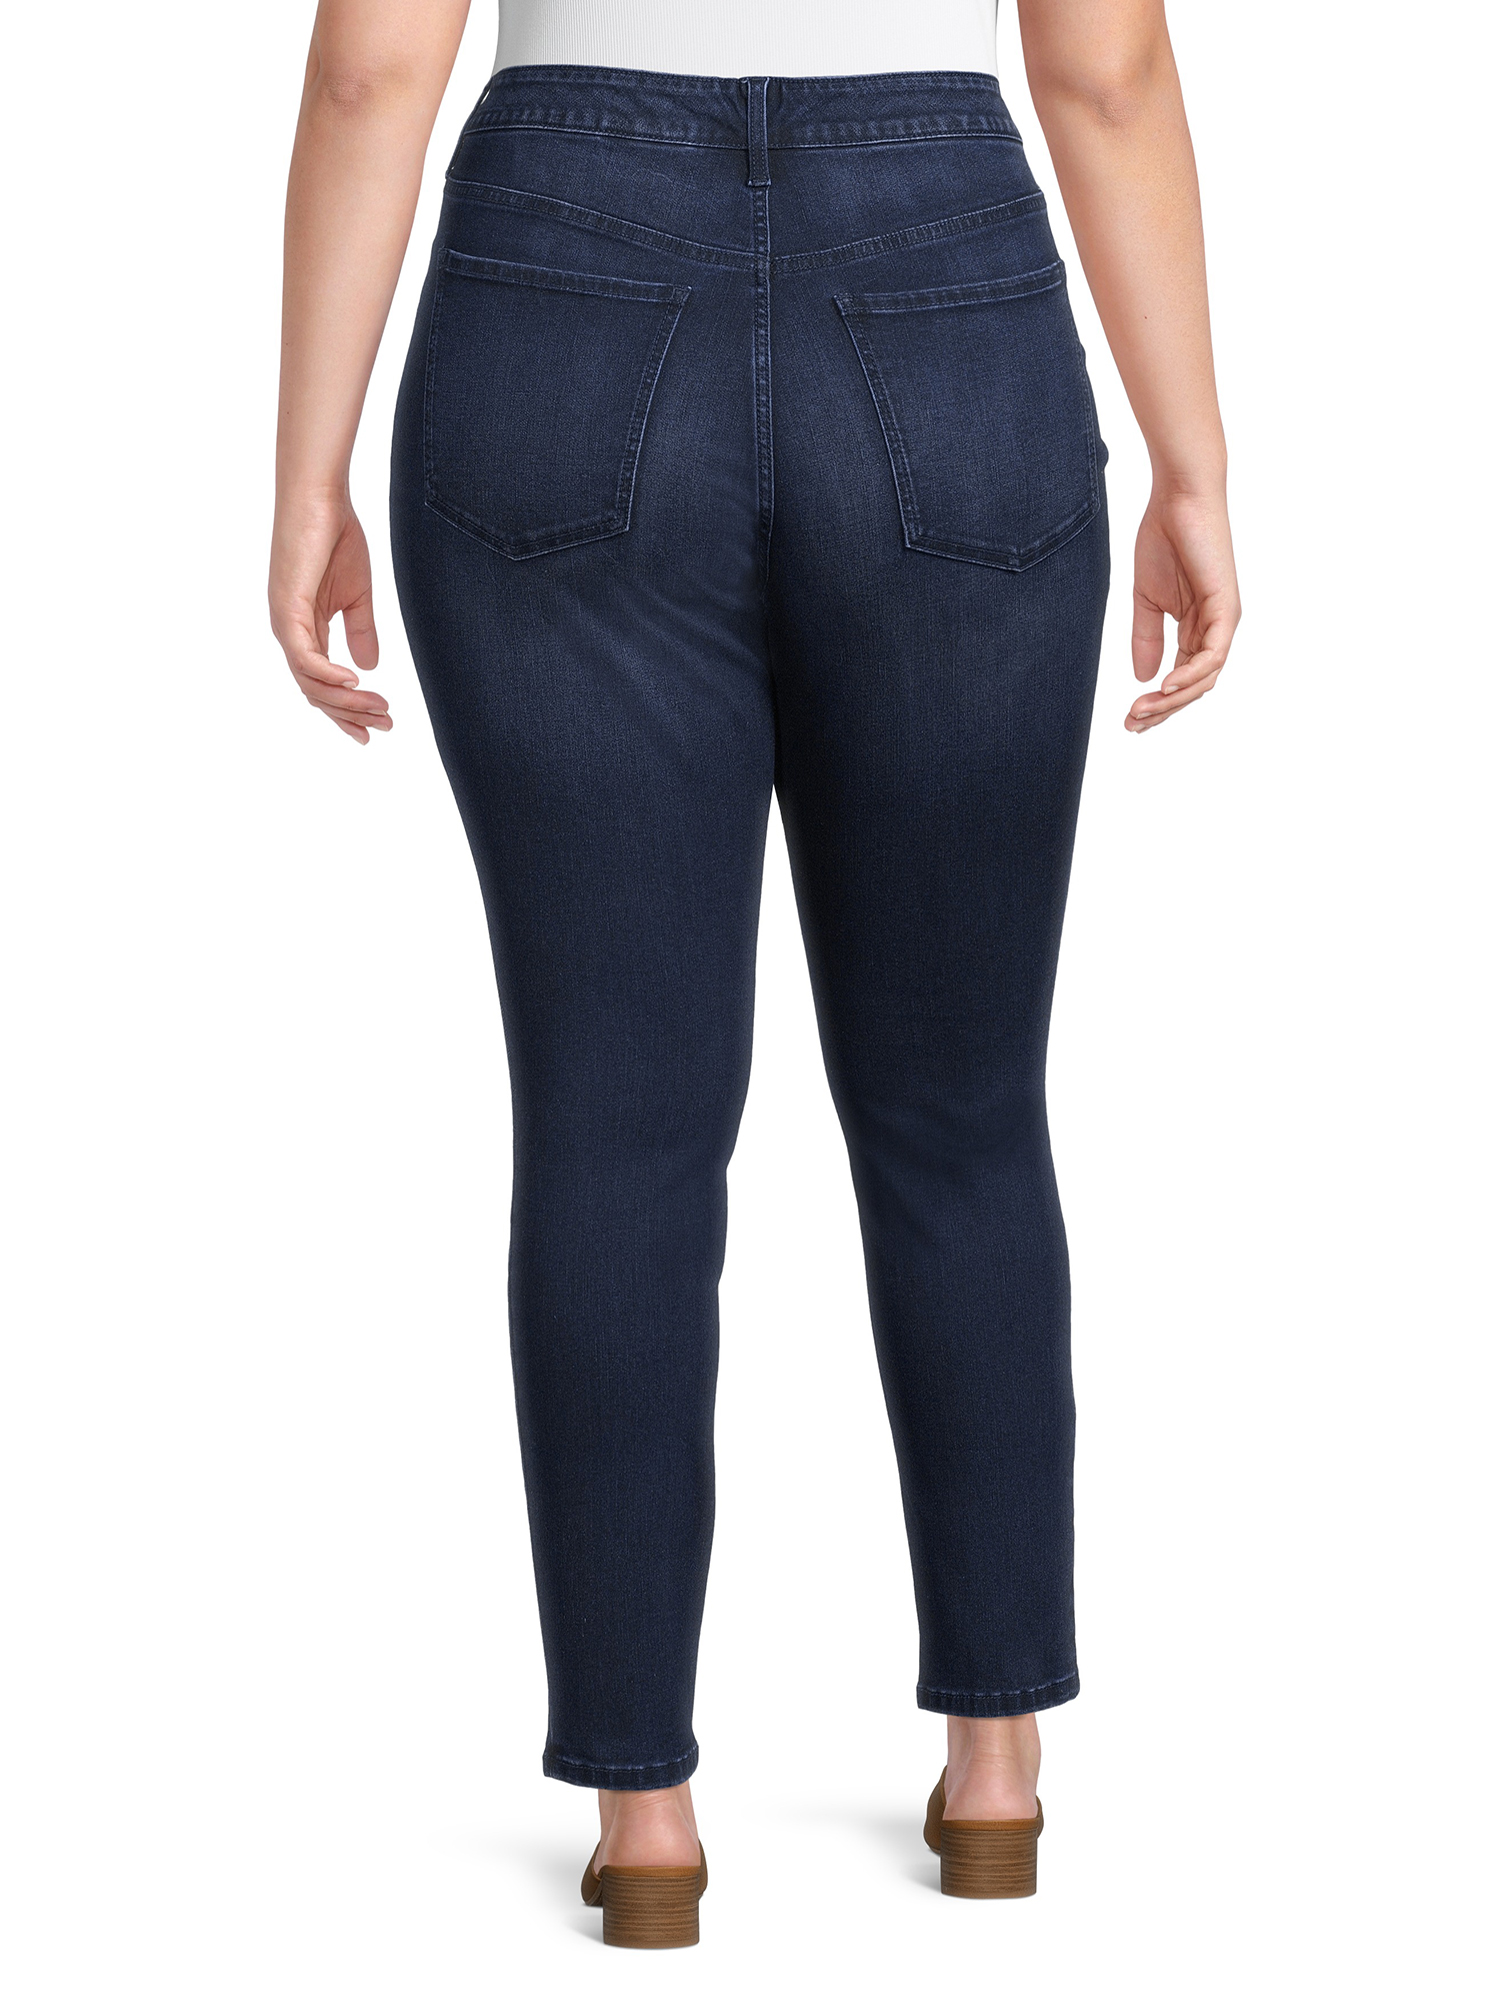 Terra & Sky Women's Plus Size Skinny Jeans, 29” Inseam - image 4 of 11